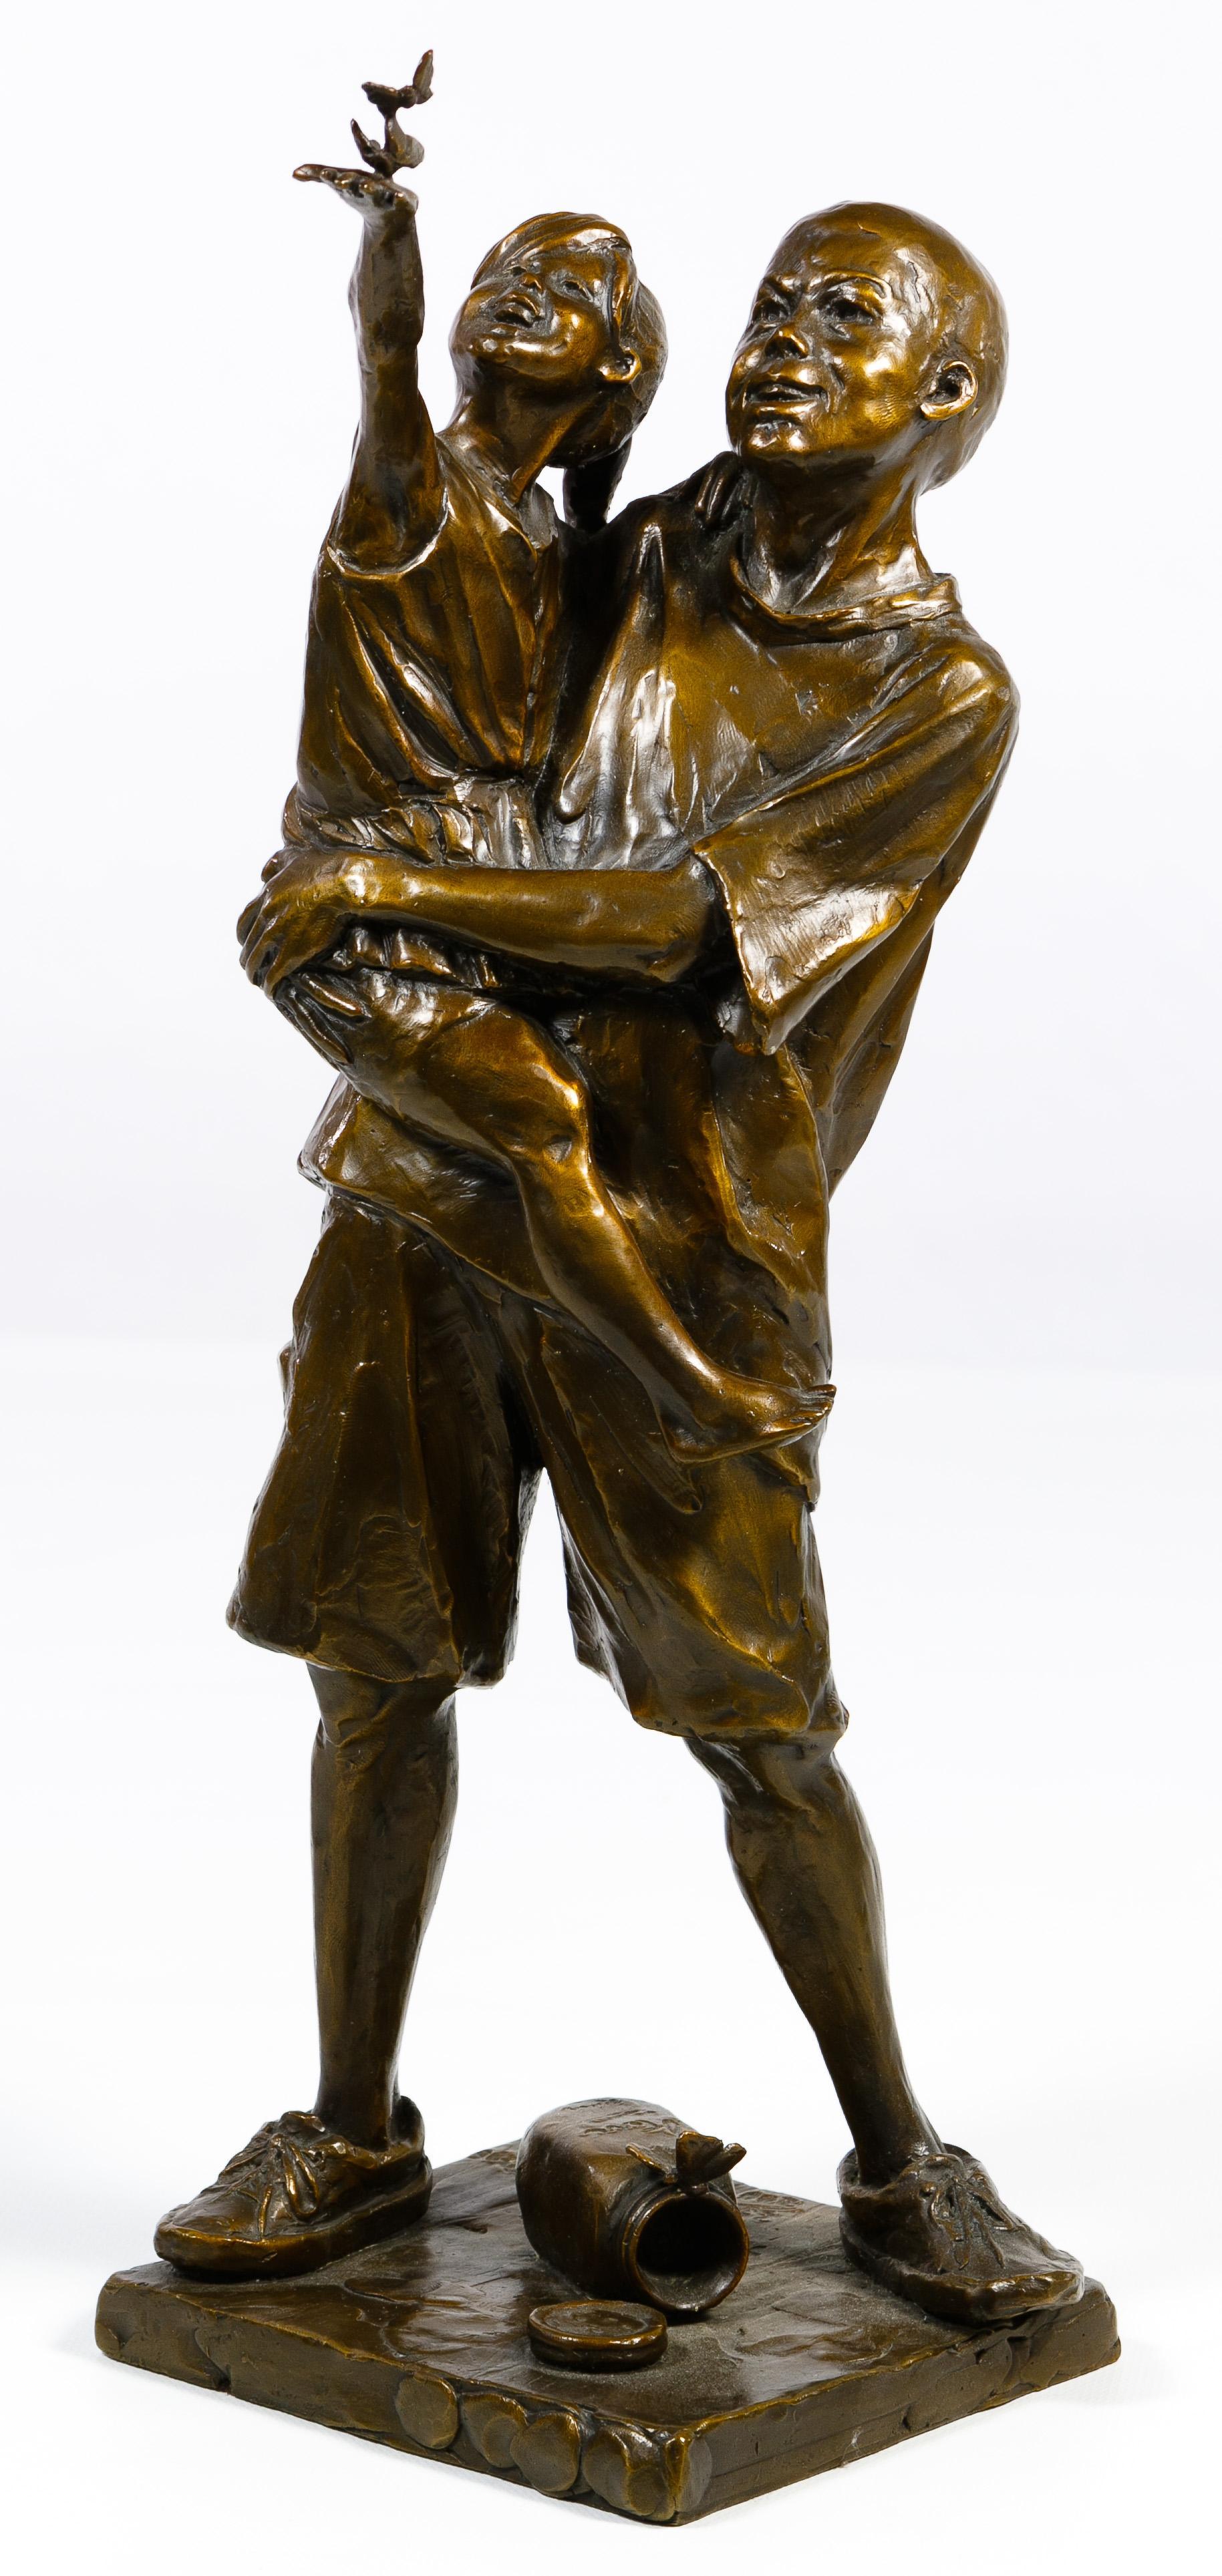 Gary Lee Price Figurative Sculpture - New Seasons